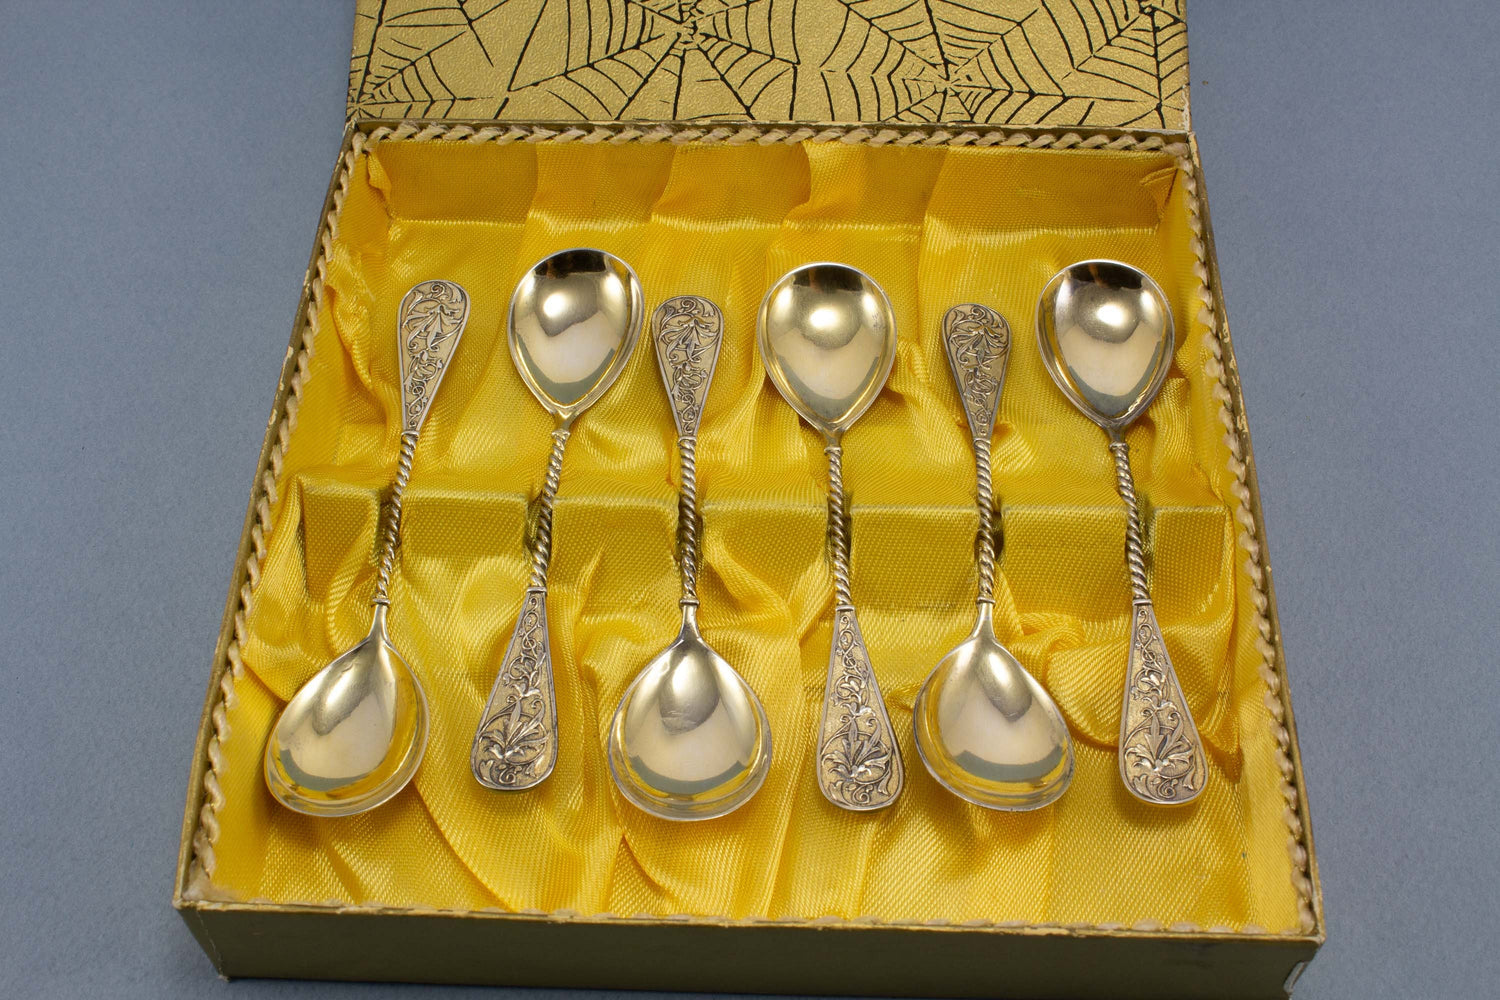 6 antike Eierlöffel aus 800er Silber, vergoldet, florales Jugendstil Muster, um 1900, Silberbesteck, M.J. Rückert